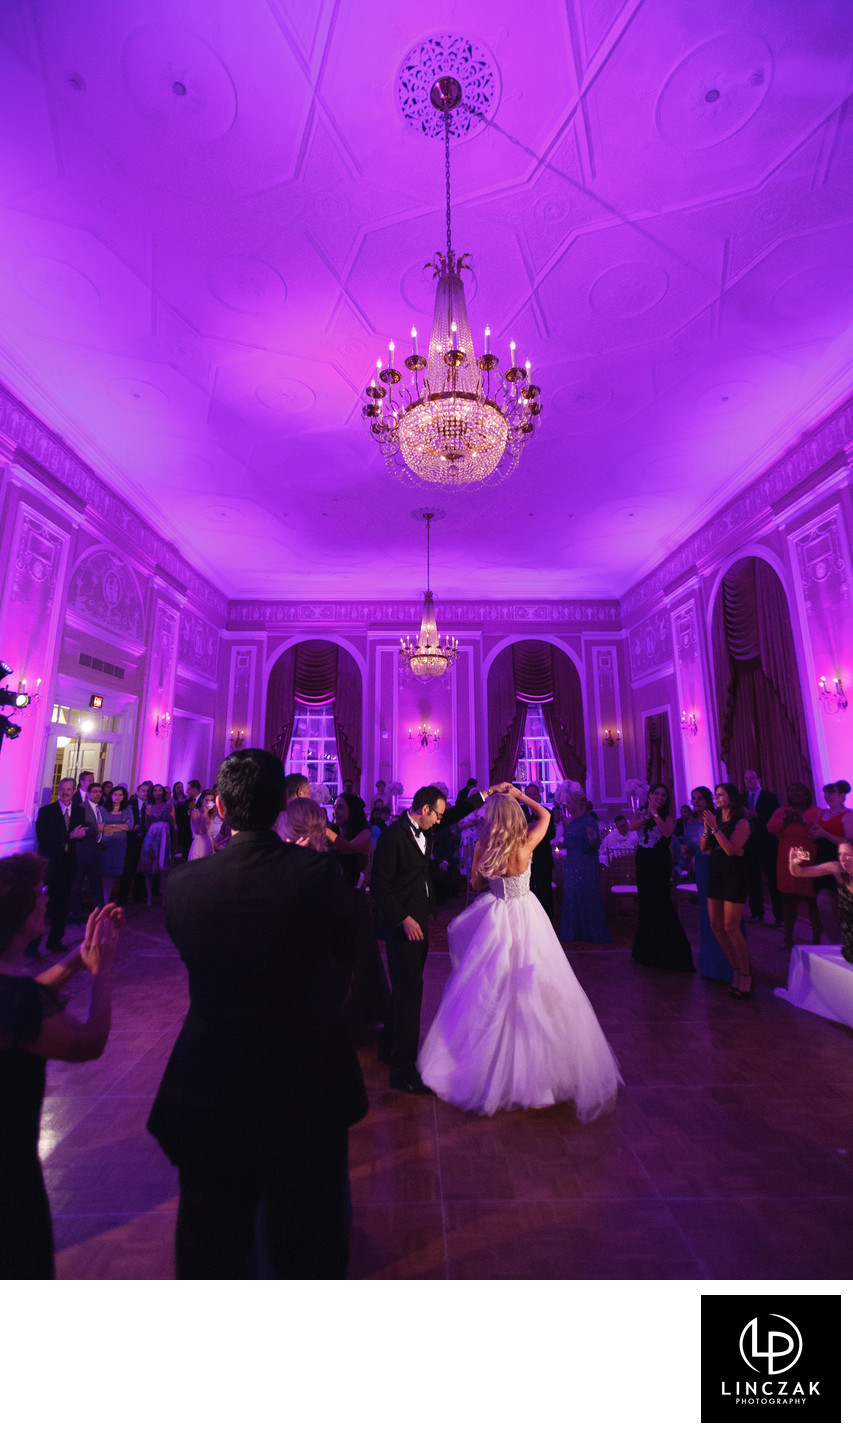 renaissance ballroom wedding reception